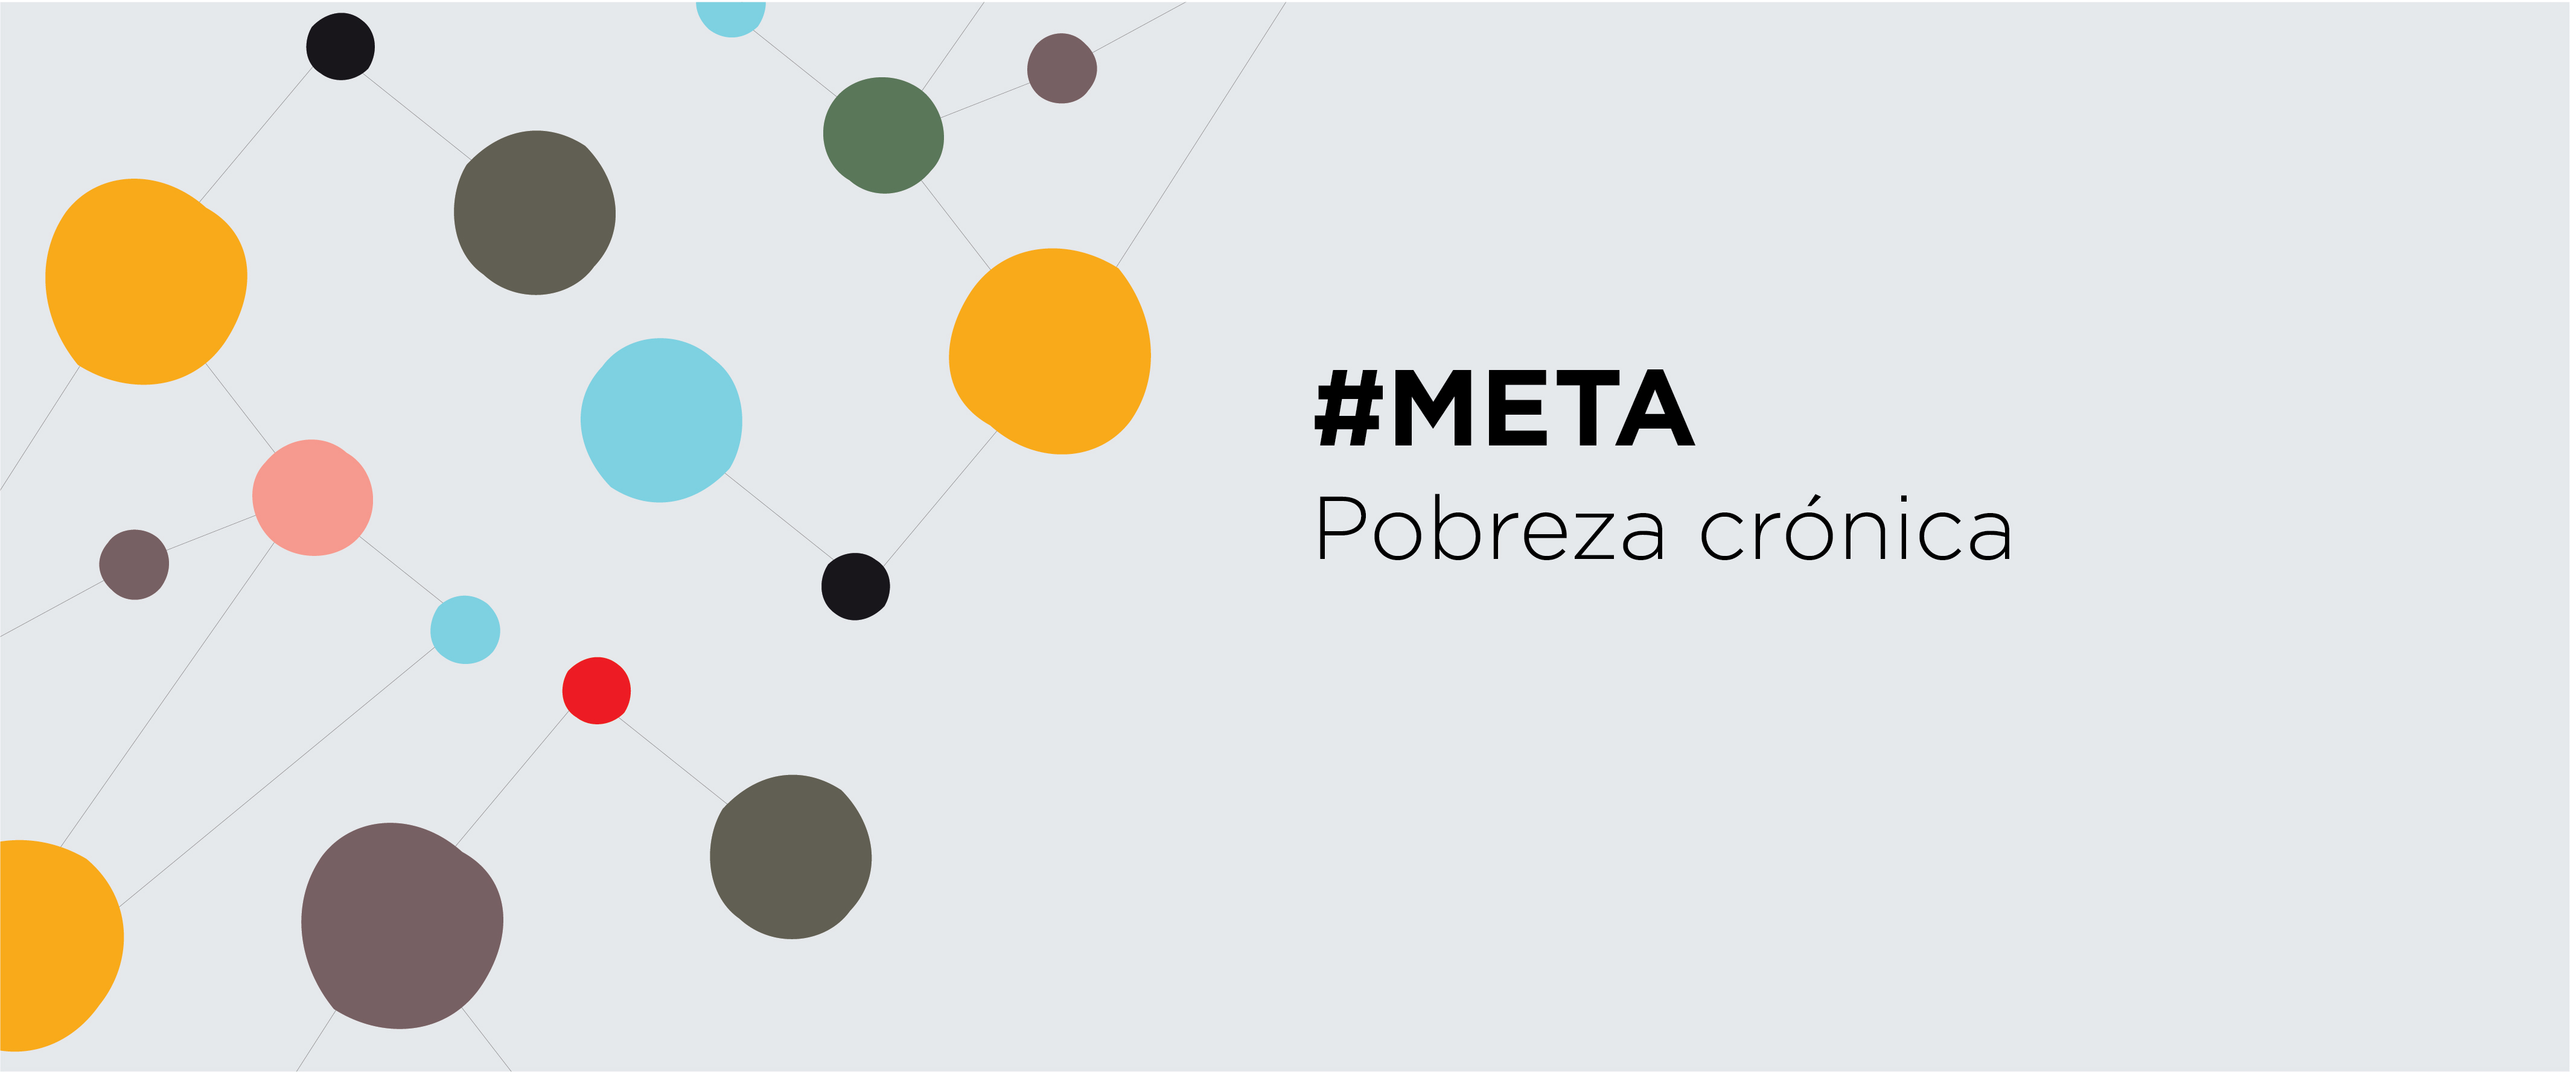 Flyer "Meta: pobreza crónica" de CIPPEC